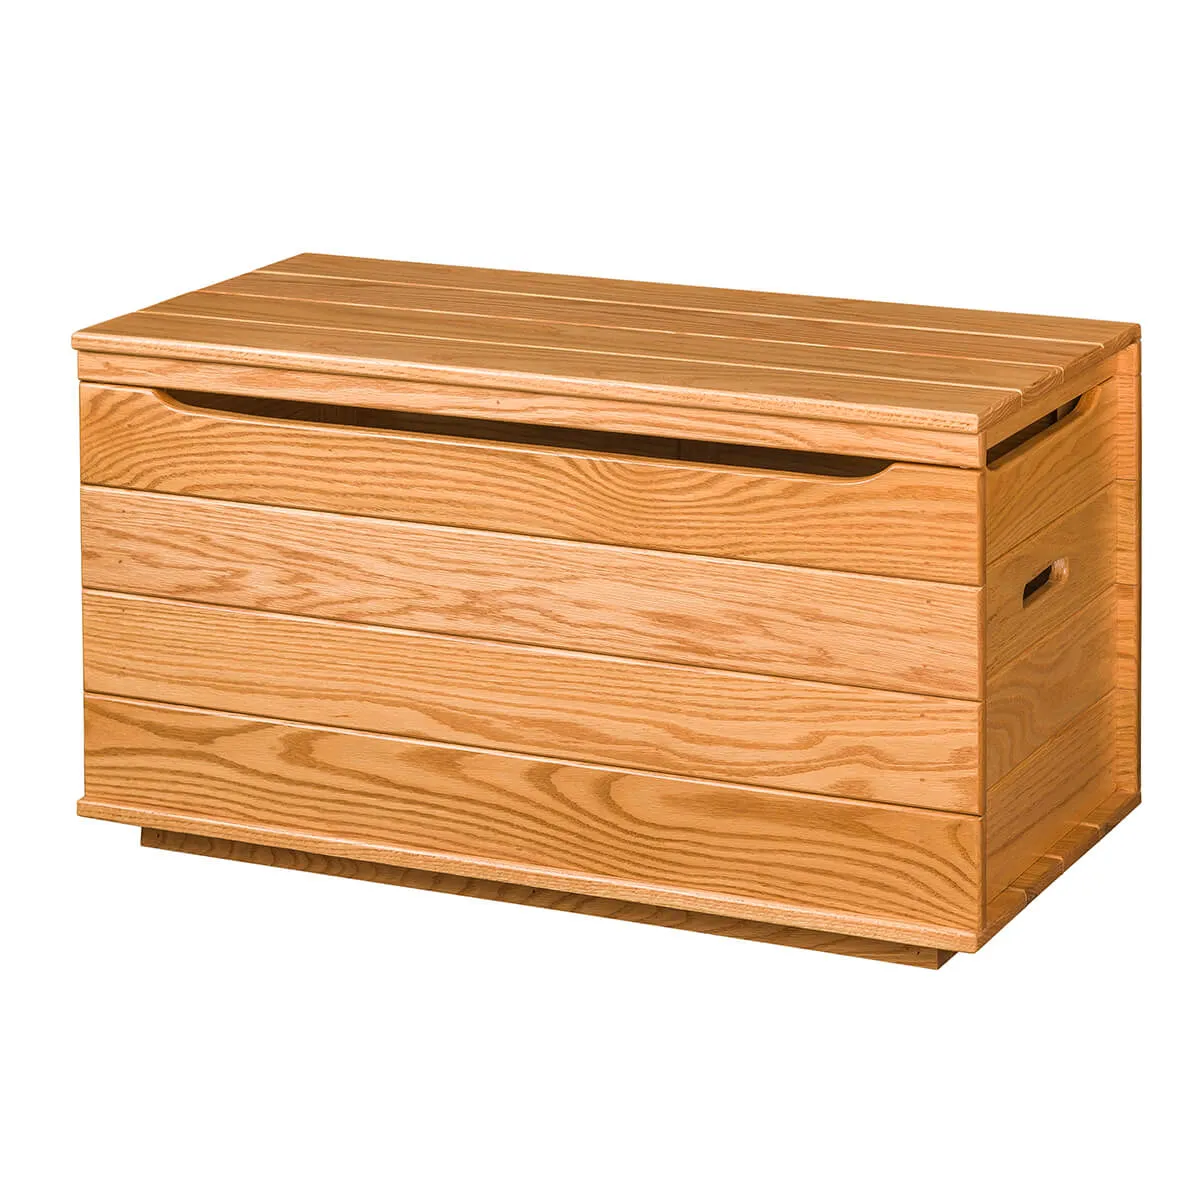 Plank 36 Inch Toy Box